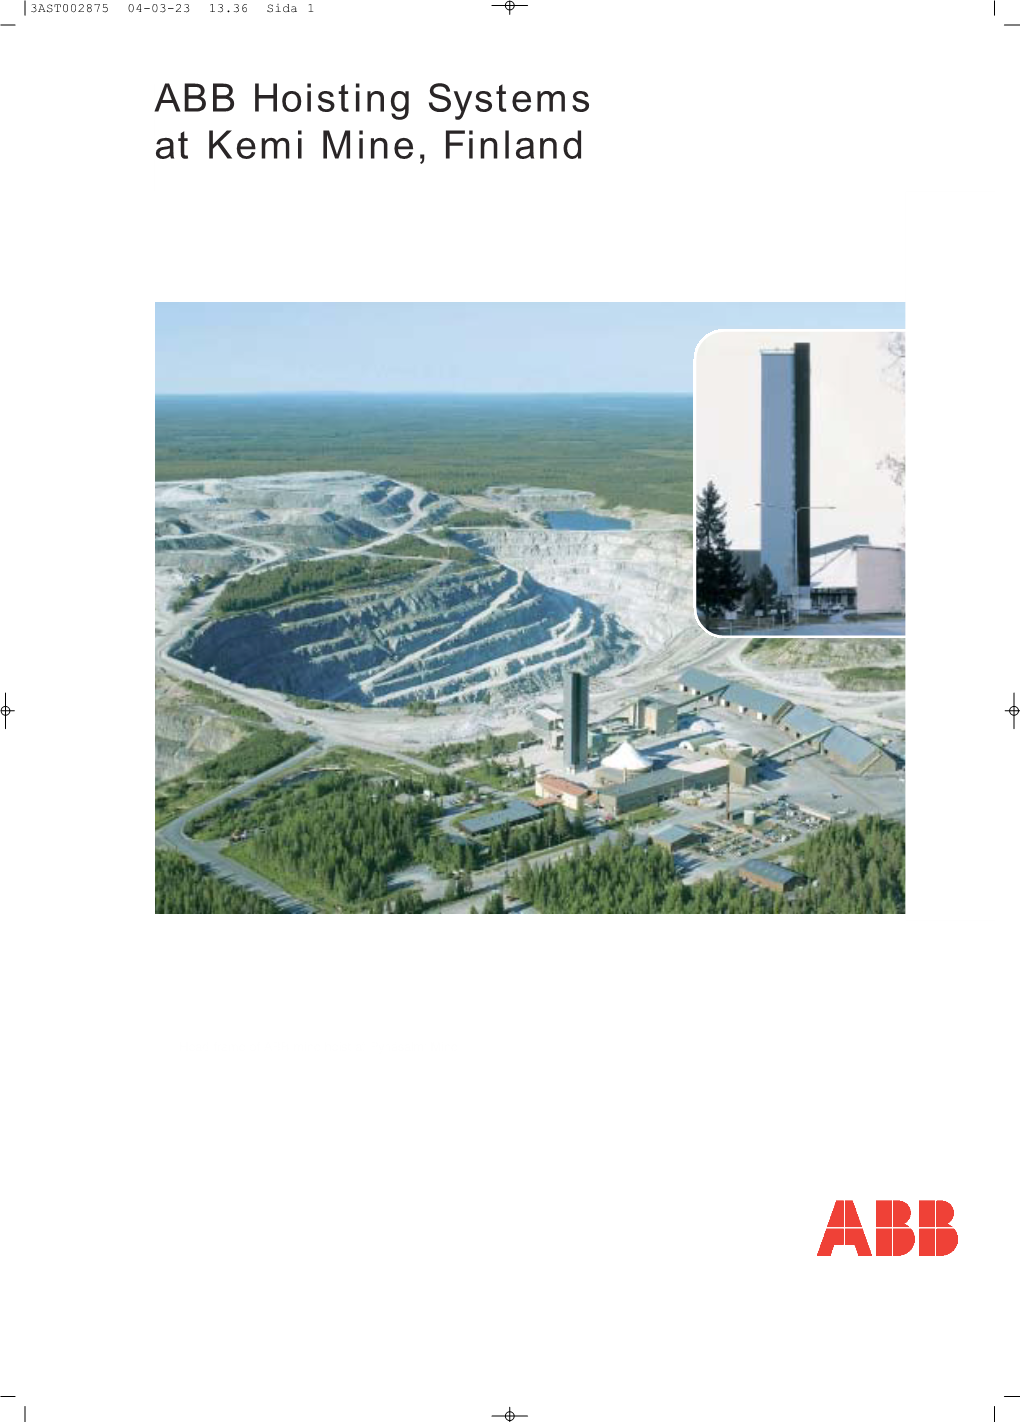 ABB Hoisting Systems at Kemi Mine, Finland